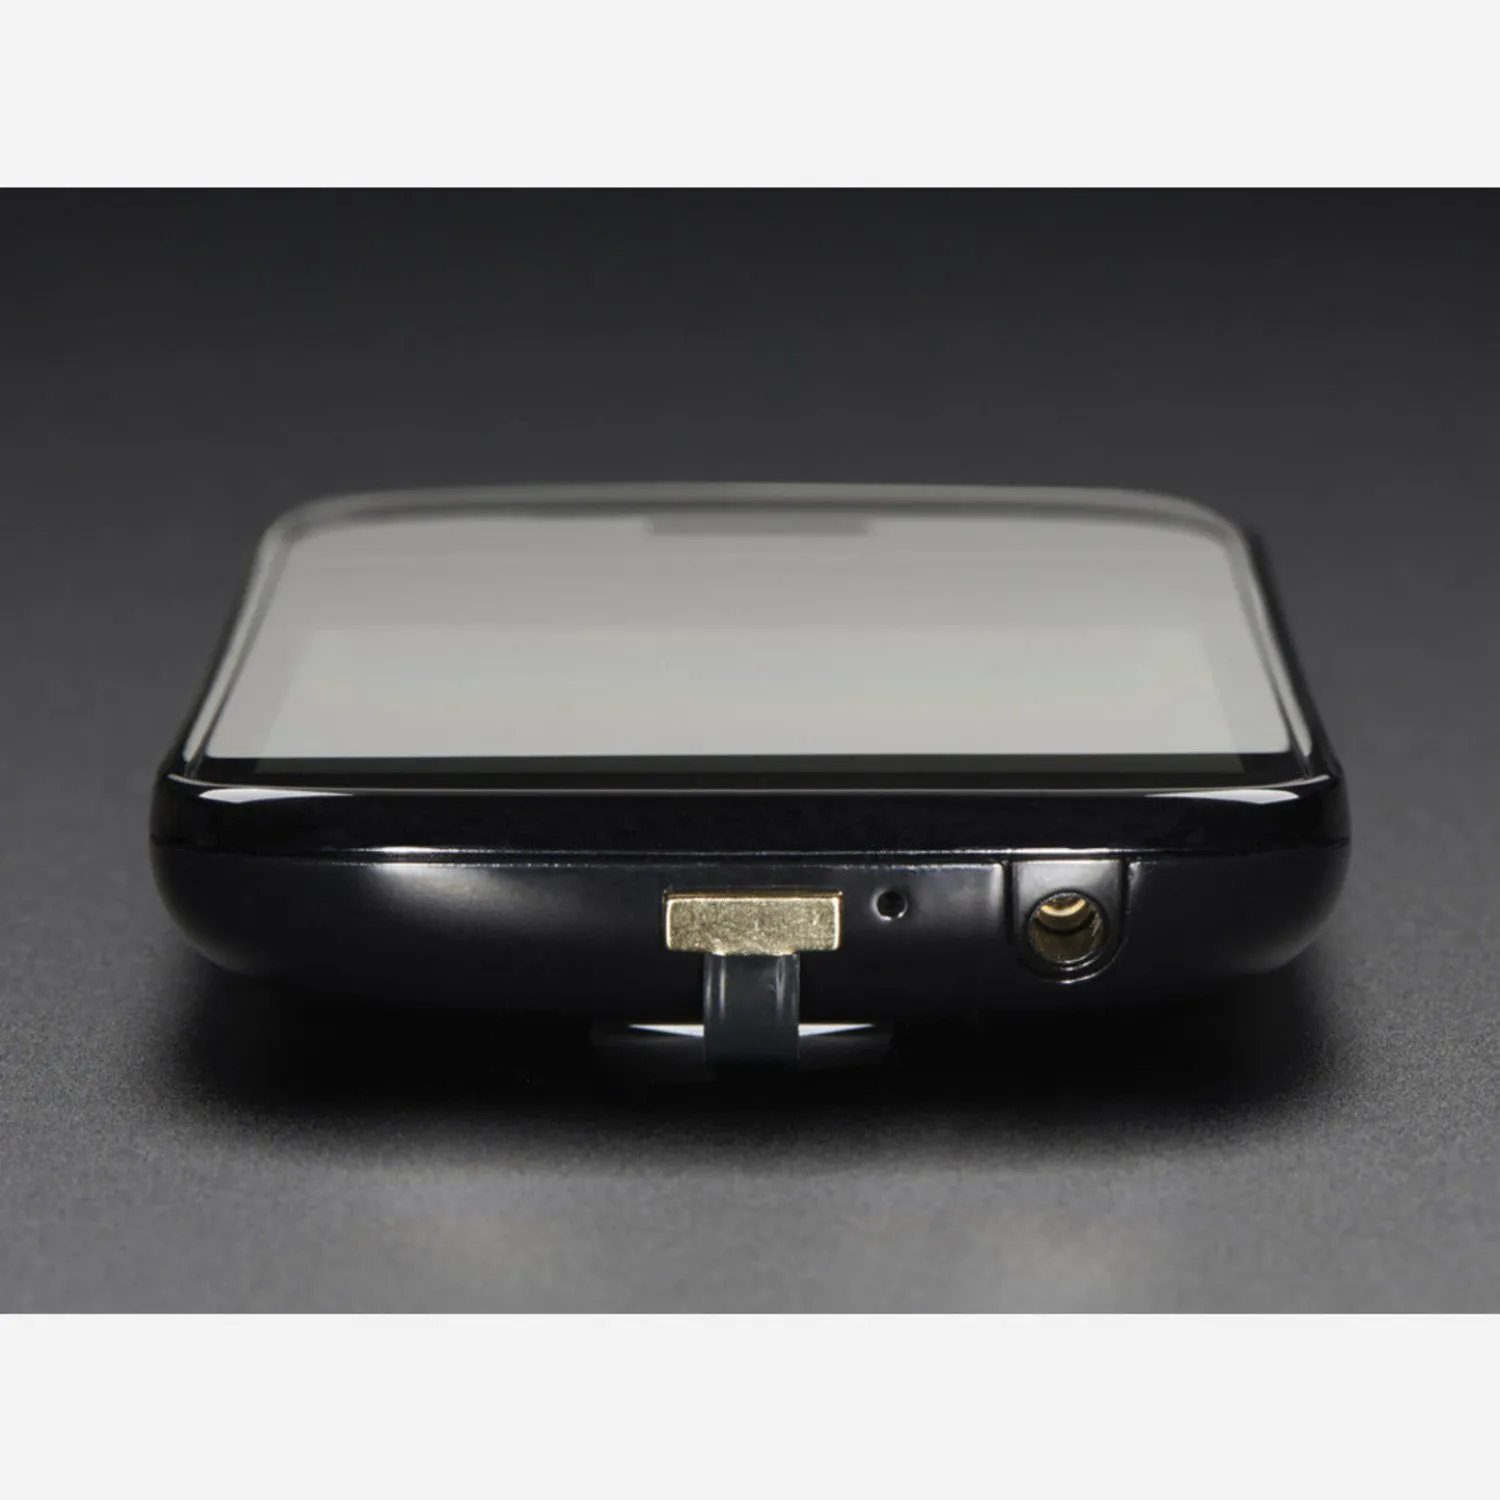 Photo of Universal Qi Wireless Charging Module - 20mm Reverse MicroUSB